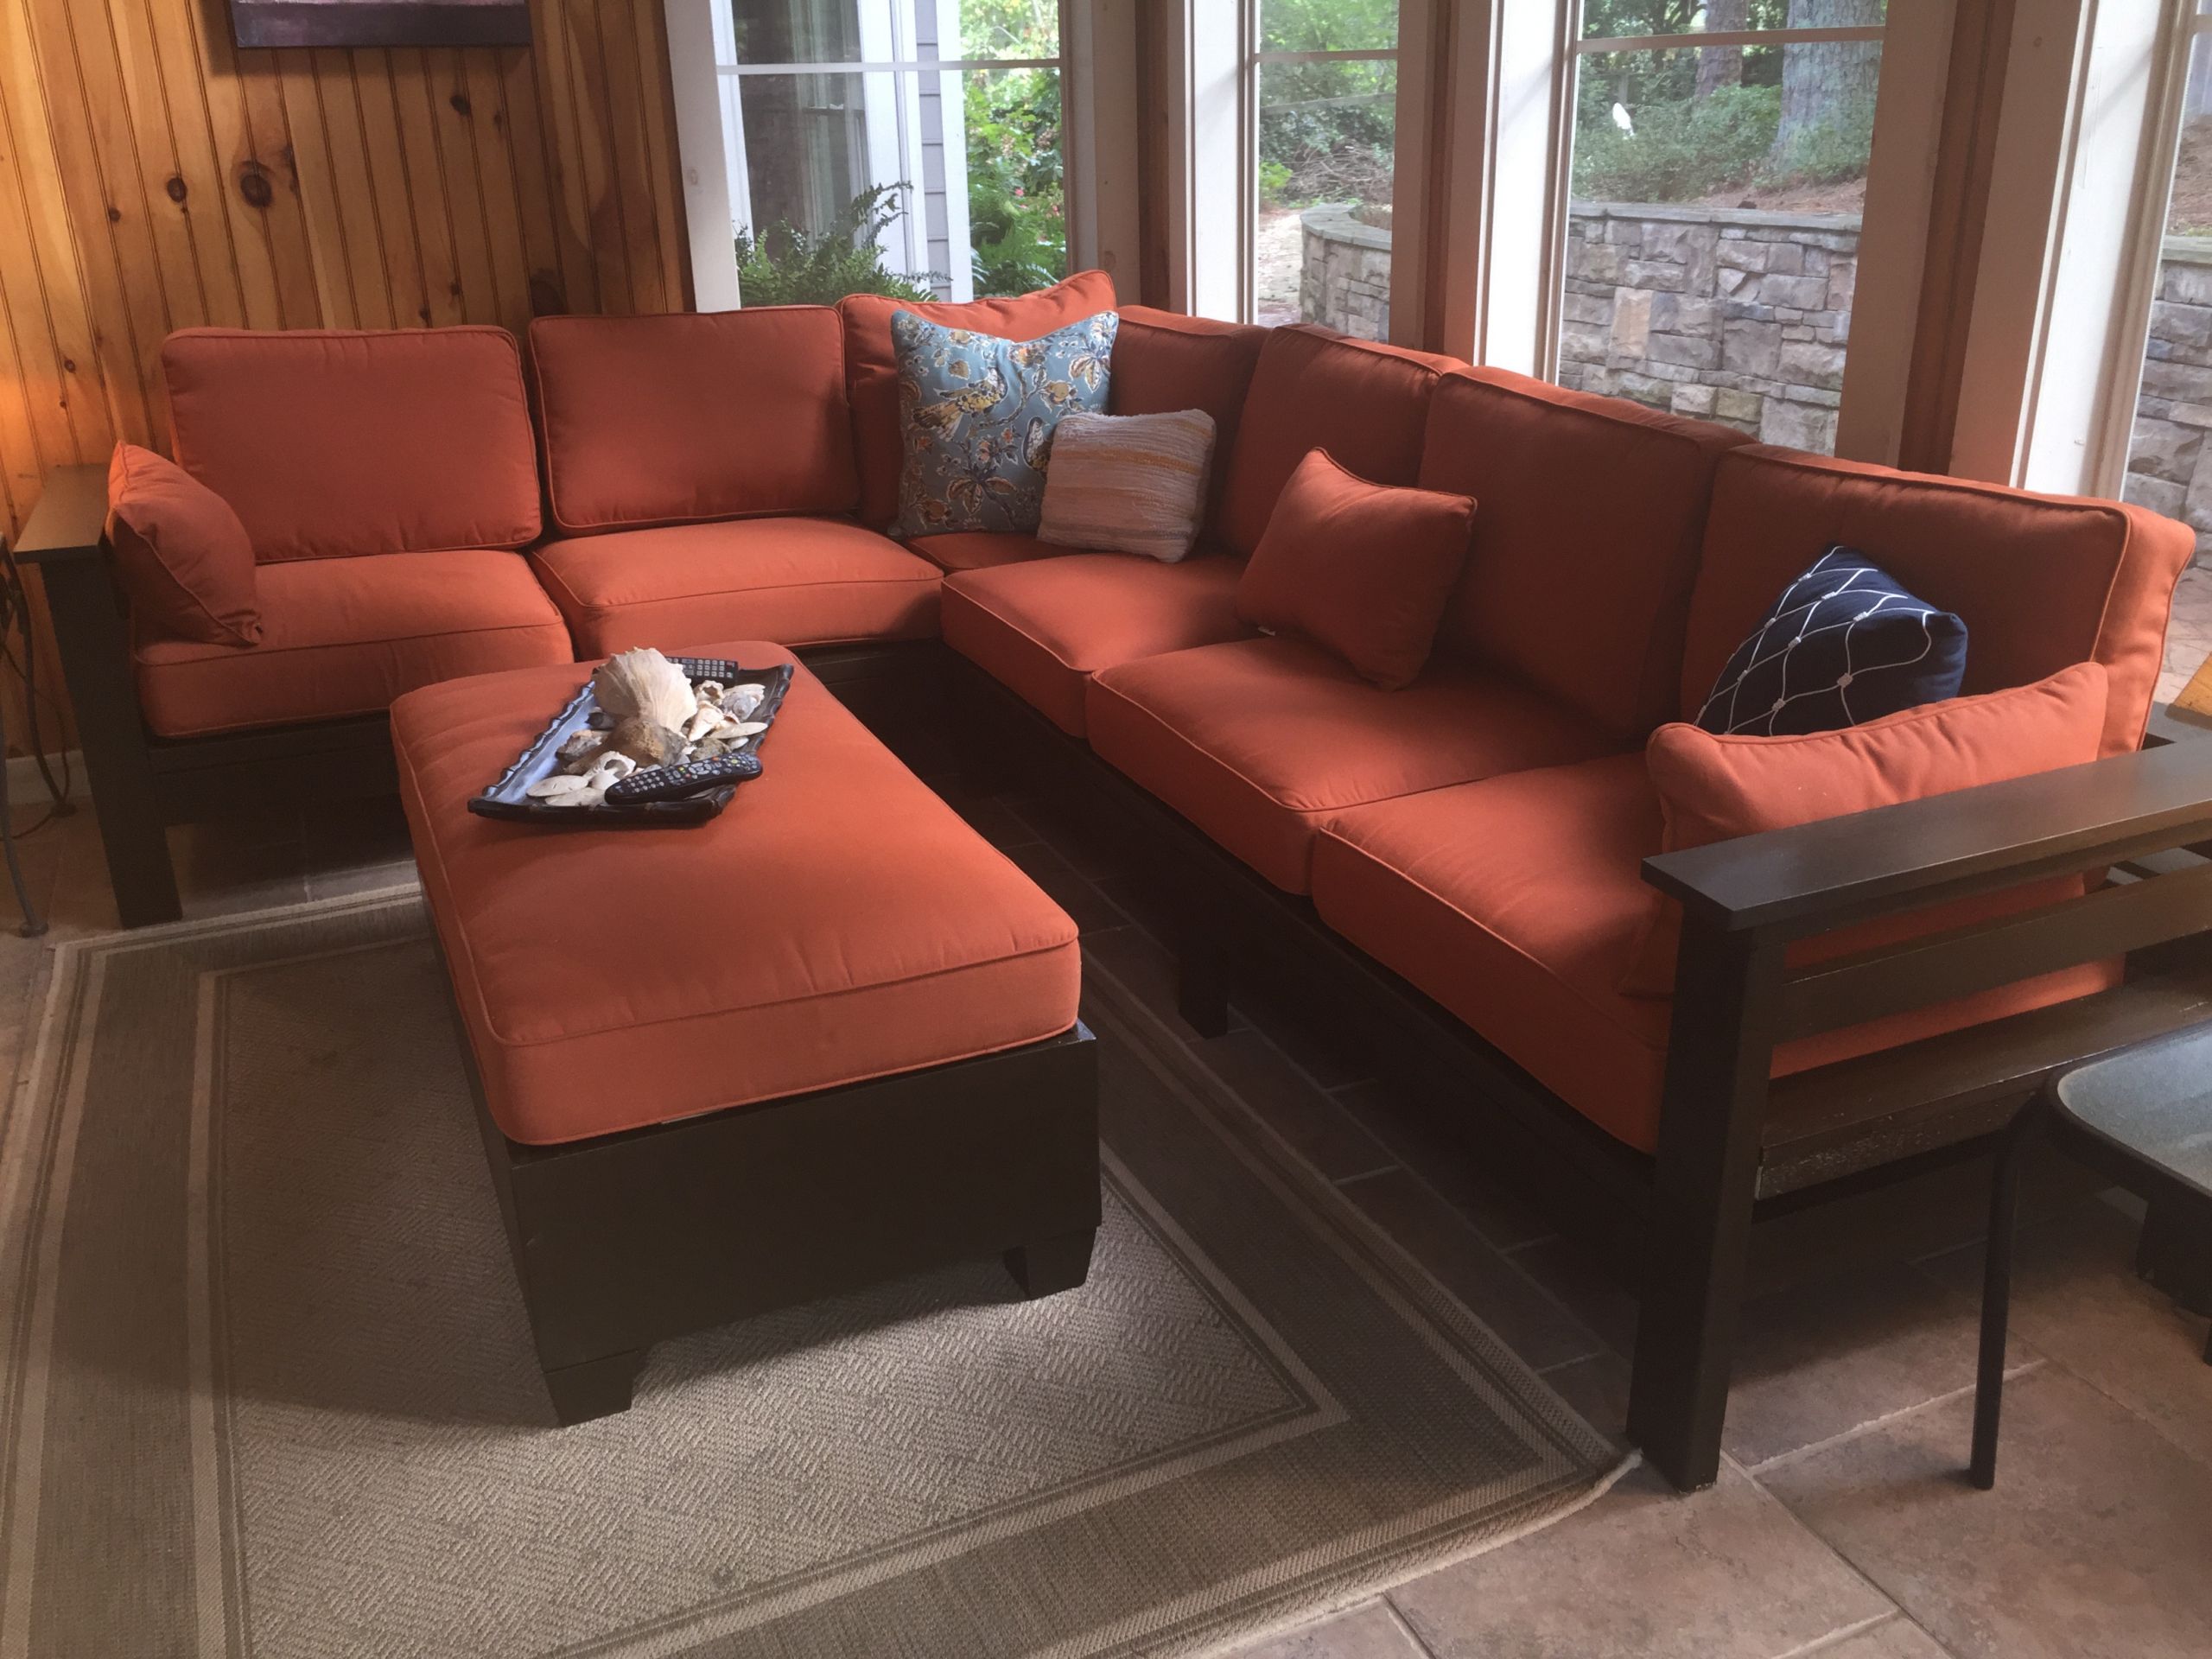 DIY Outdoor Sectional
 Furniture Inspiring Patio Furniture Design Ideas With Diy